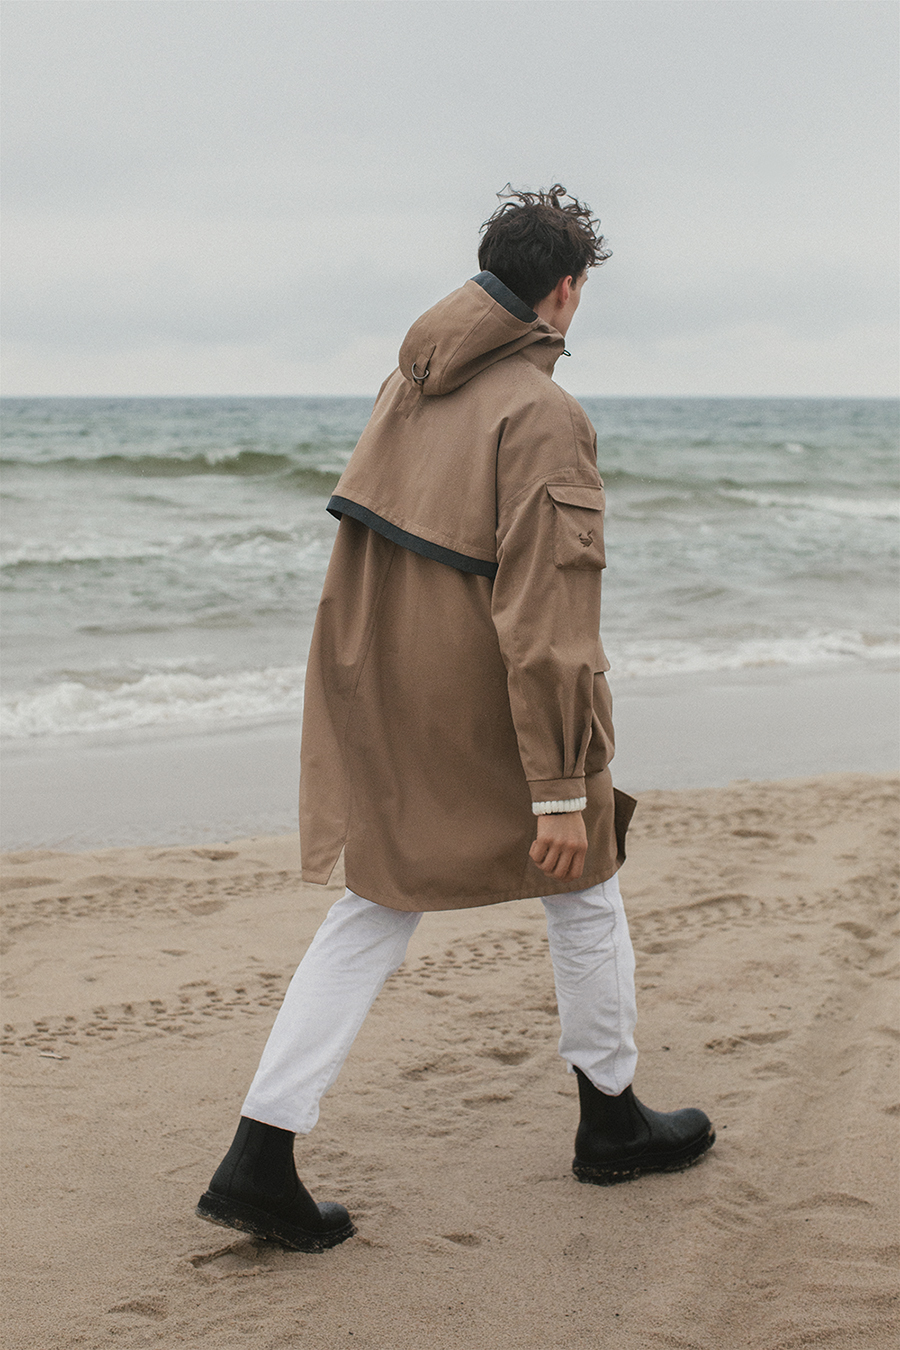 raincoat, walking by the sea